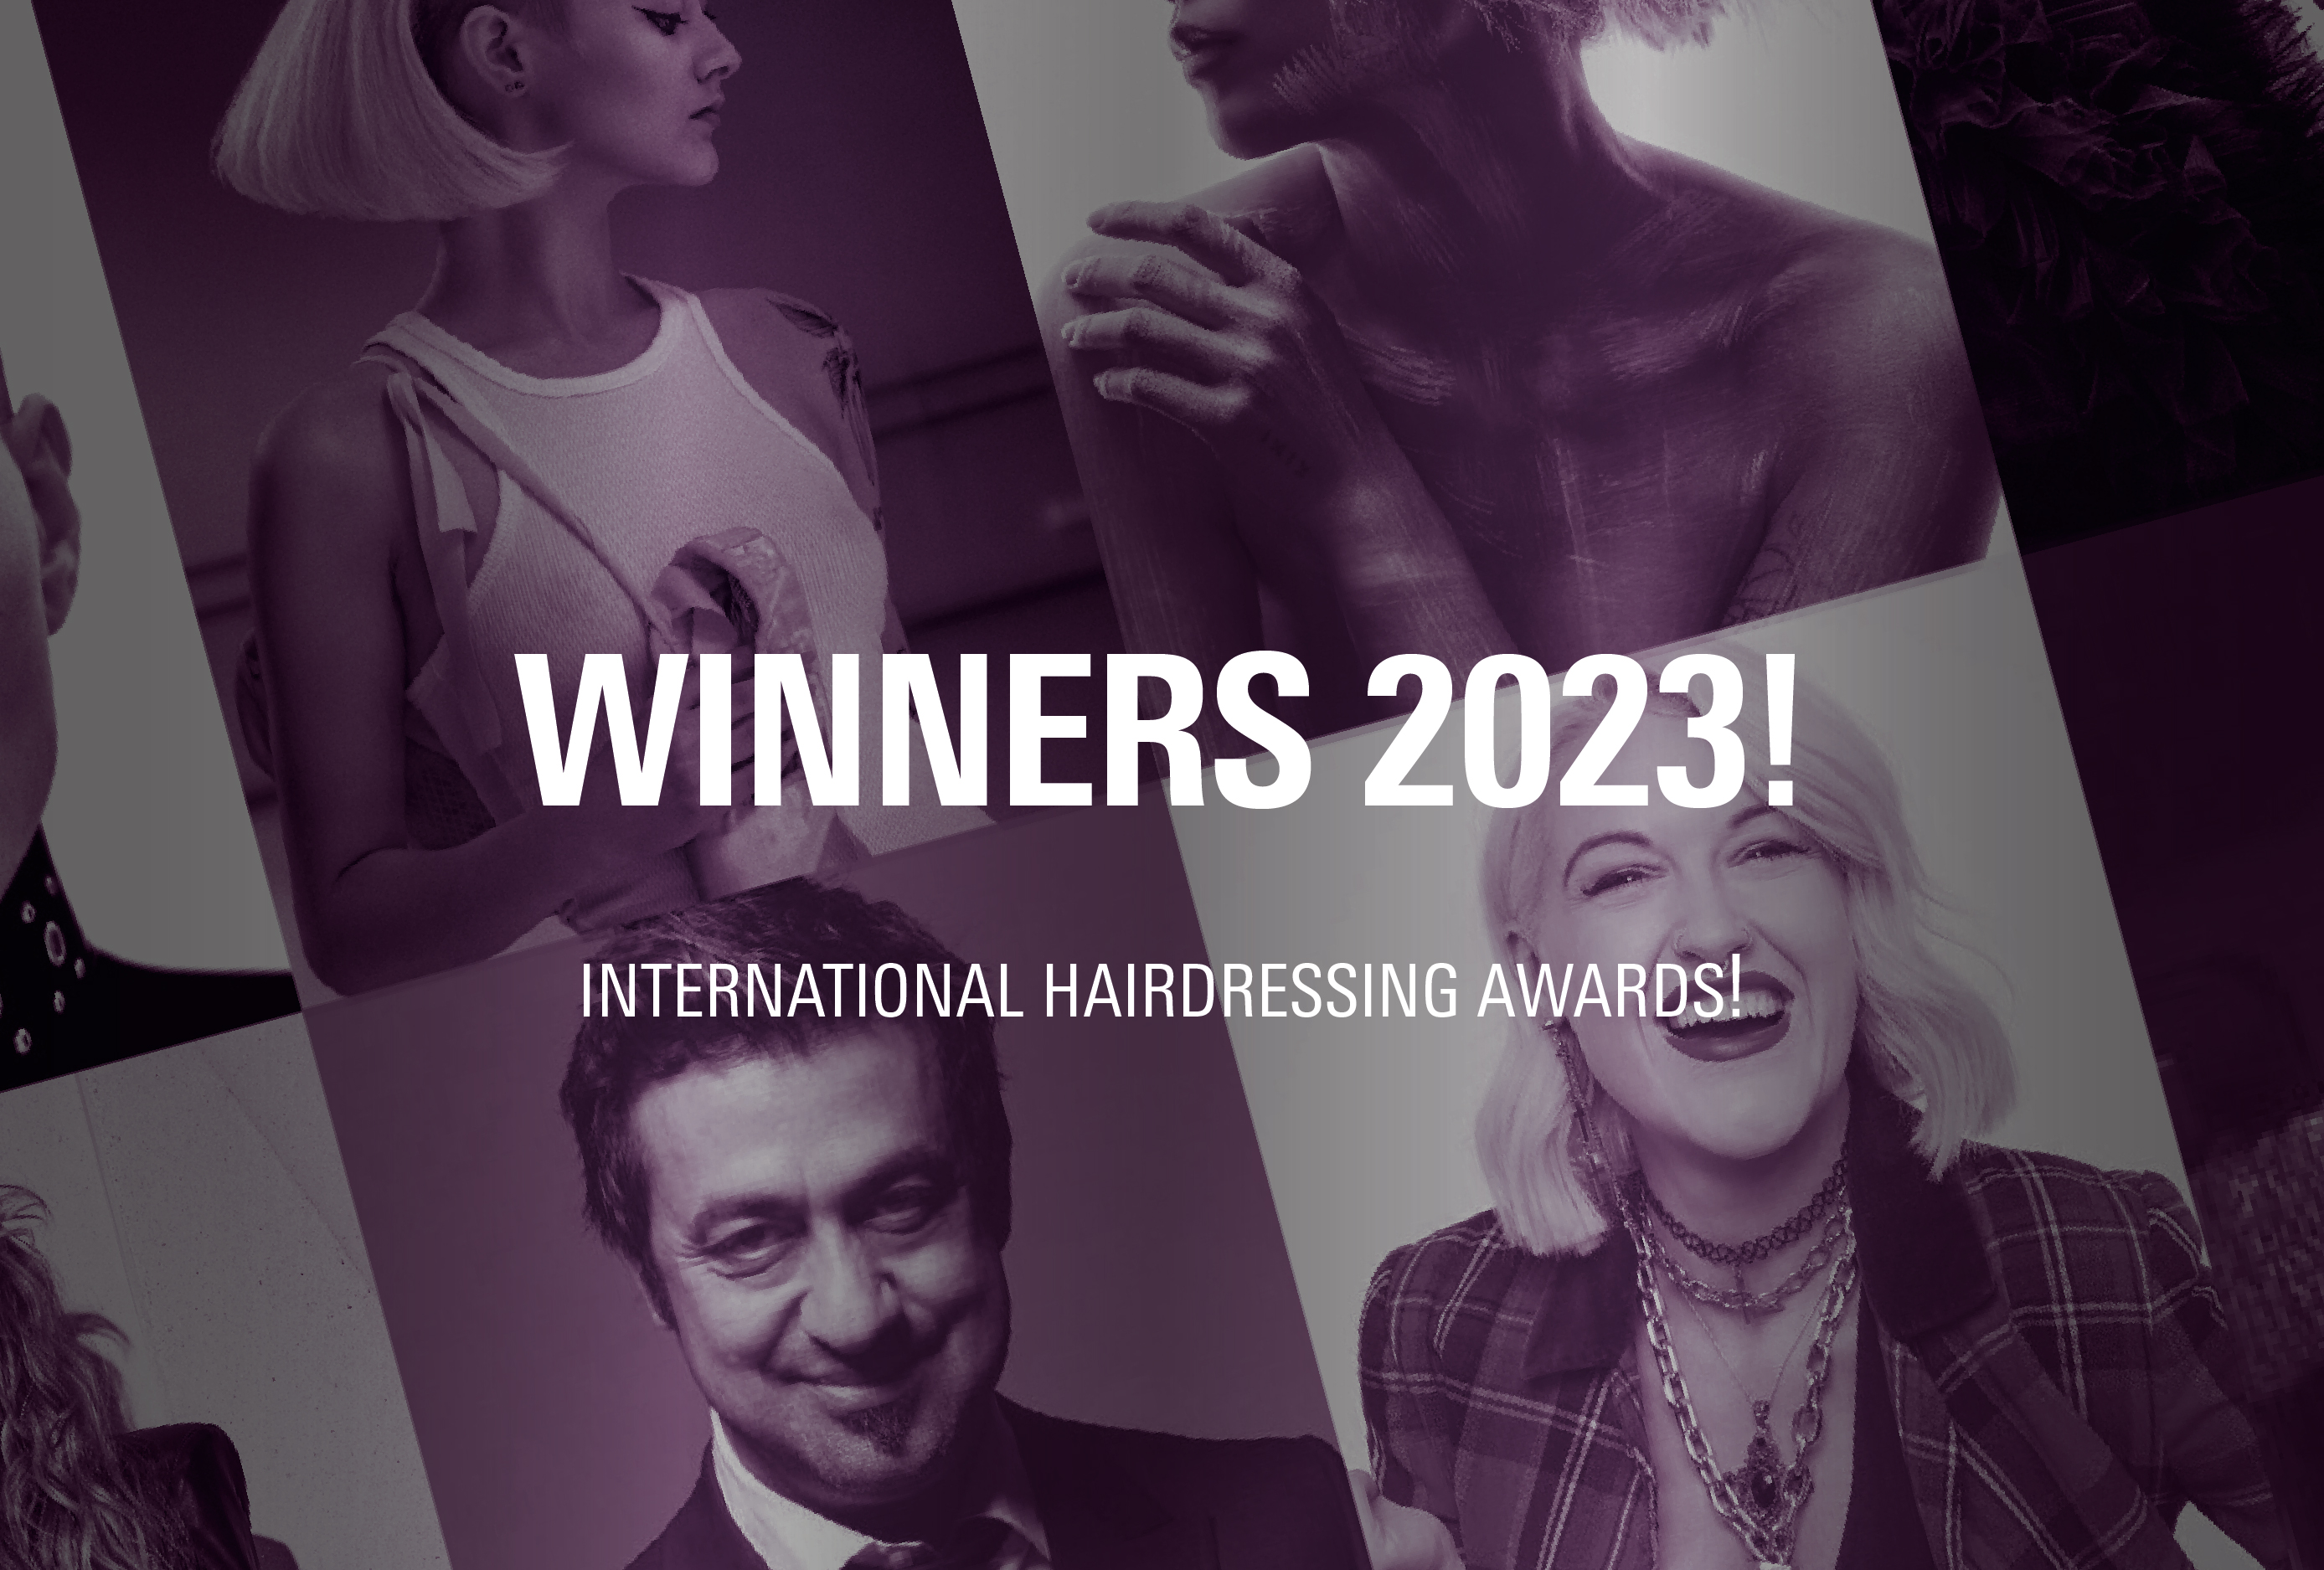 International Hairdressing Awards’ winners